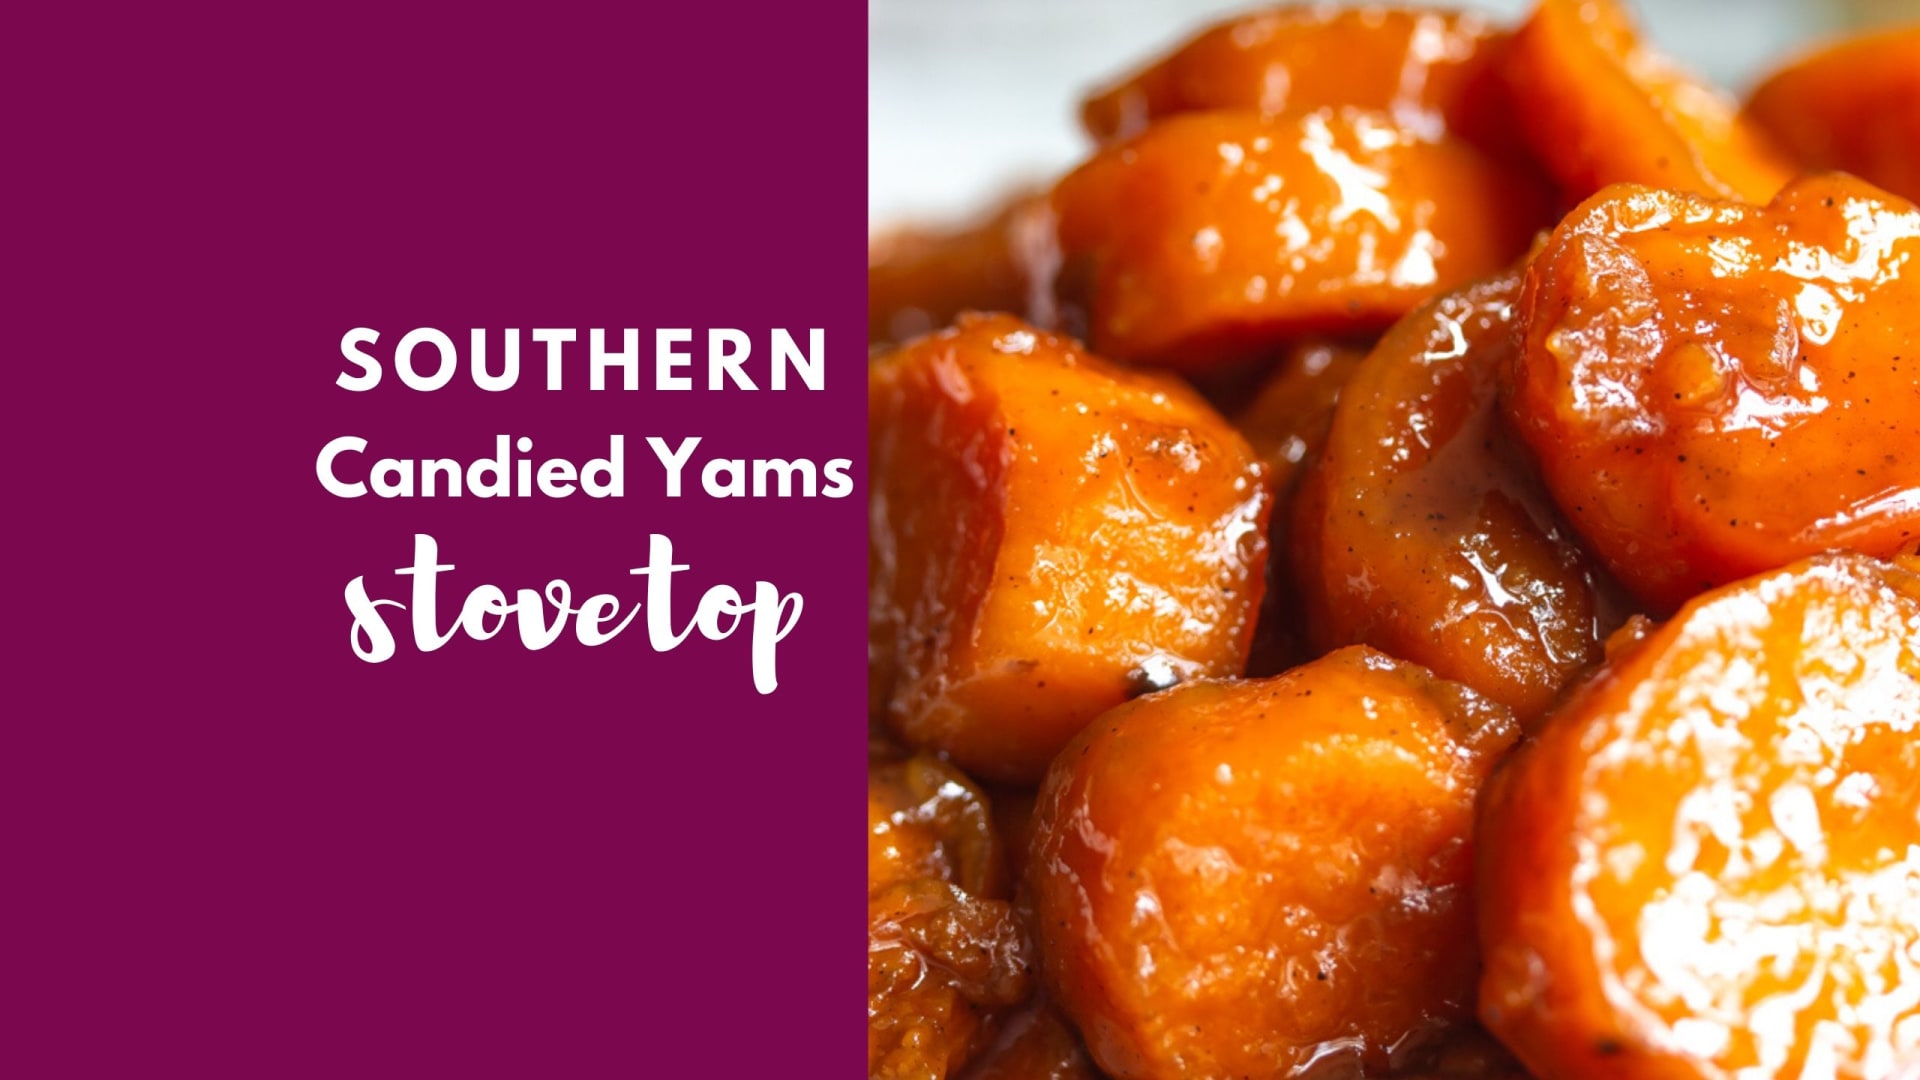 Southern Candied Yams - A Southern Soul